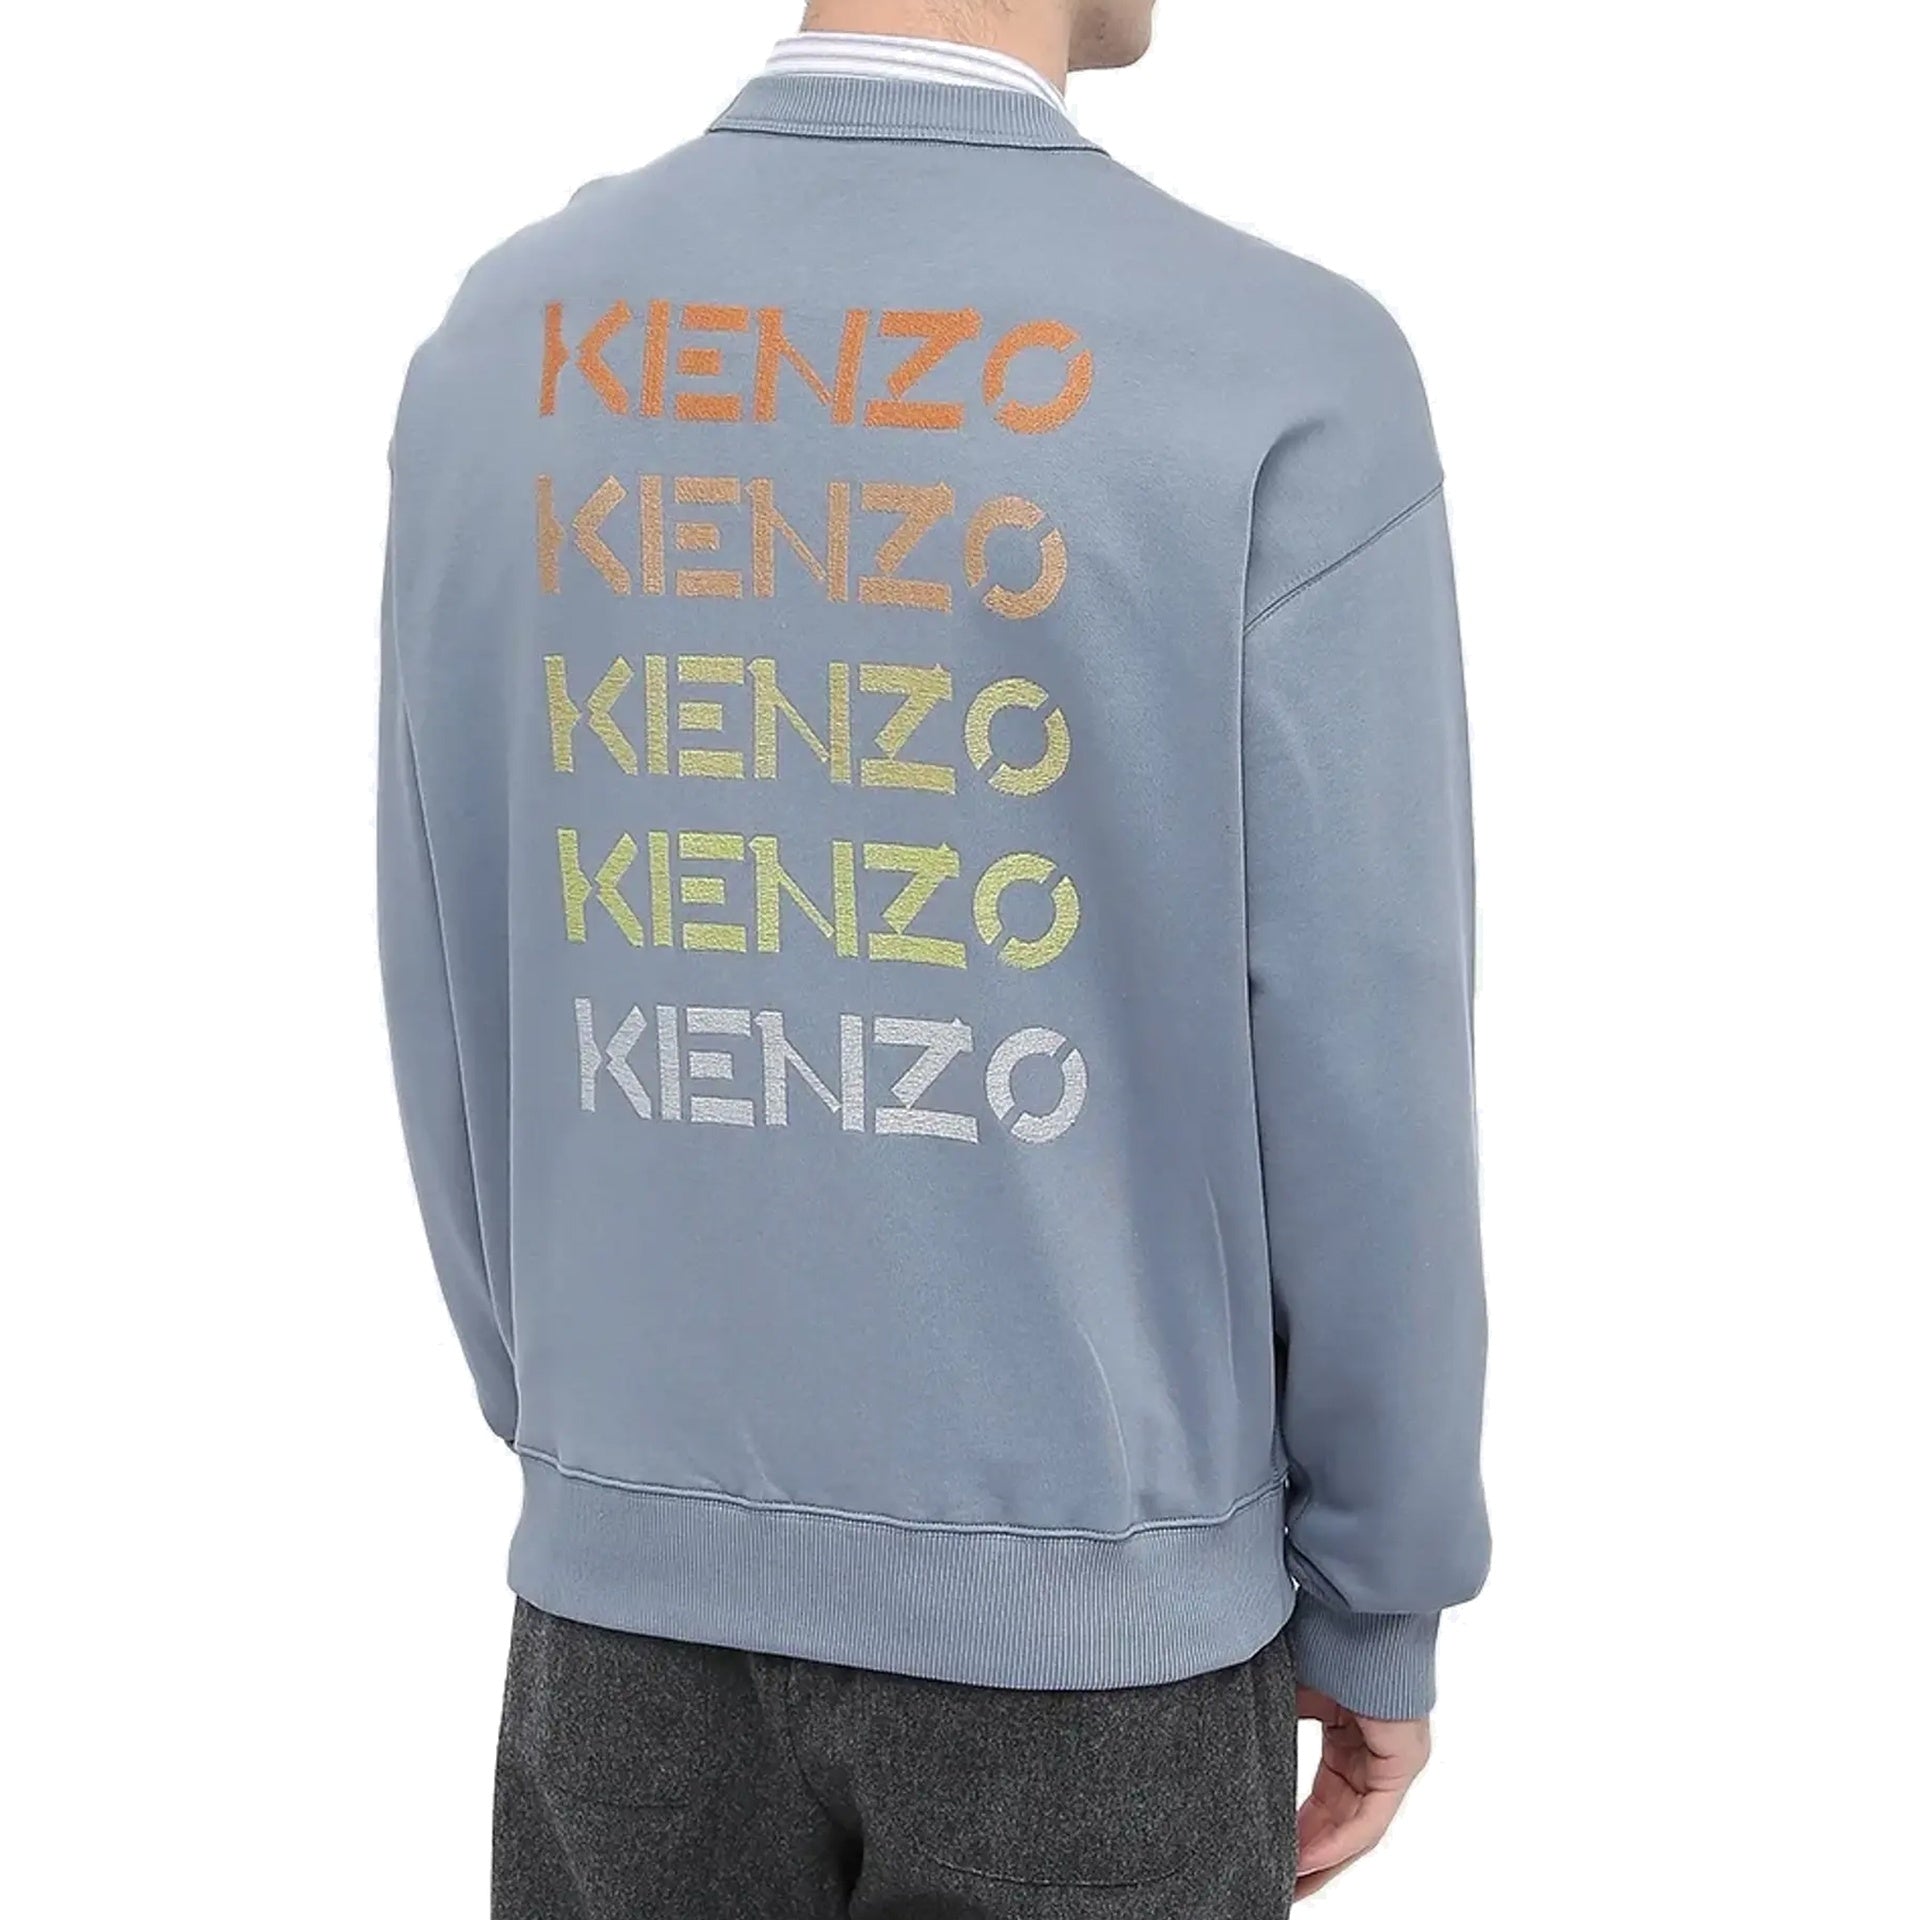 KENZO-OUTLET-SALE-Kenzo-Oversize-Logo-Sweatshirt-Shirts-ARCHIVE-COLLECTION-2.jpg